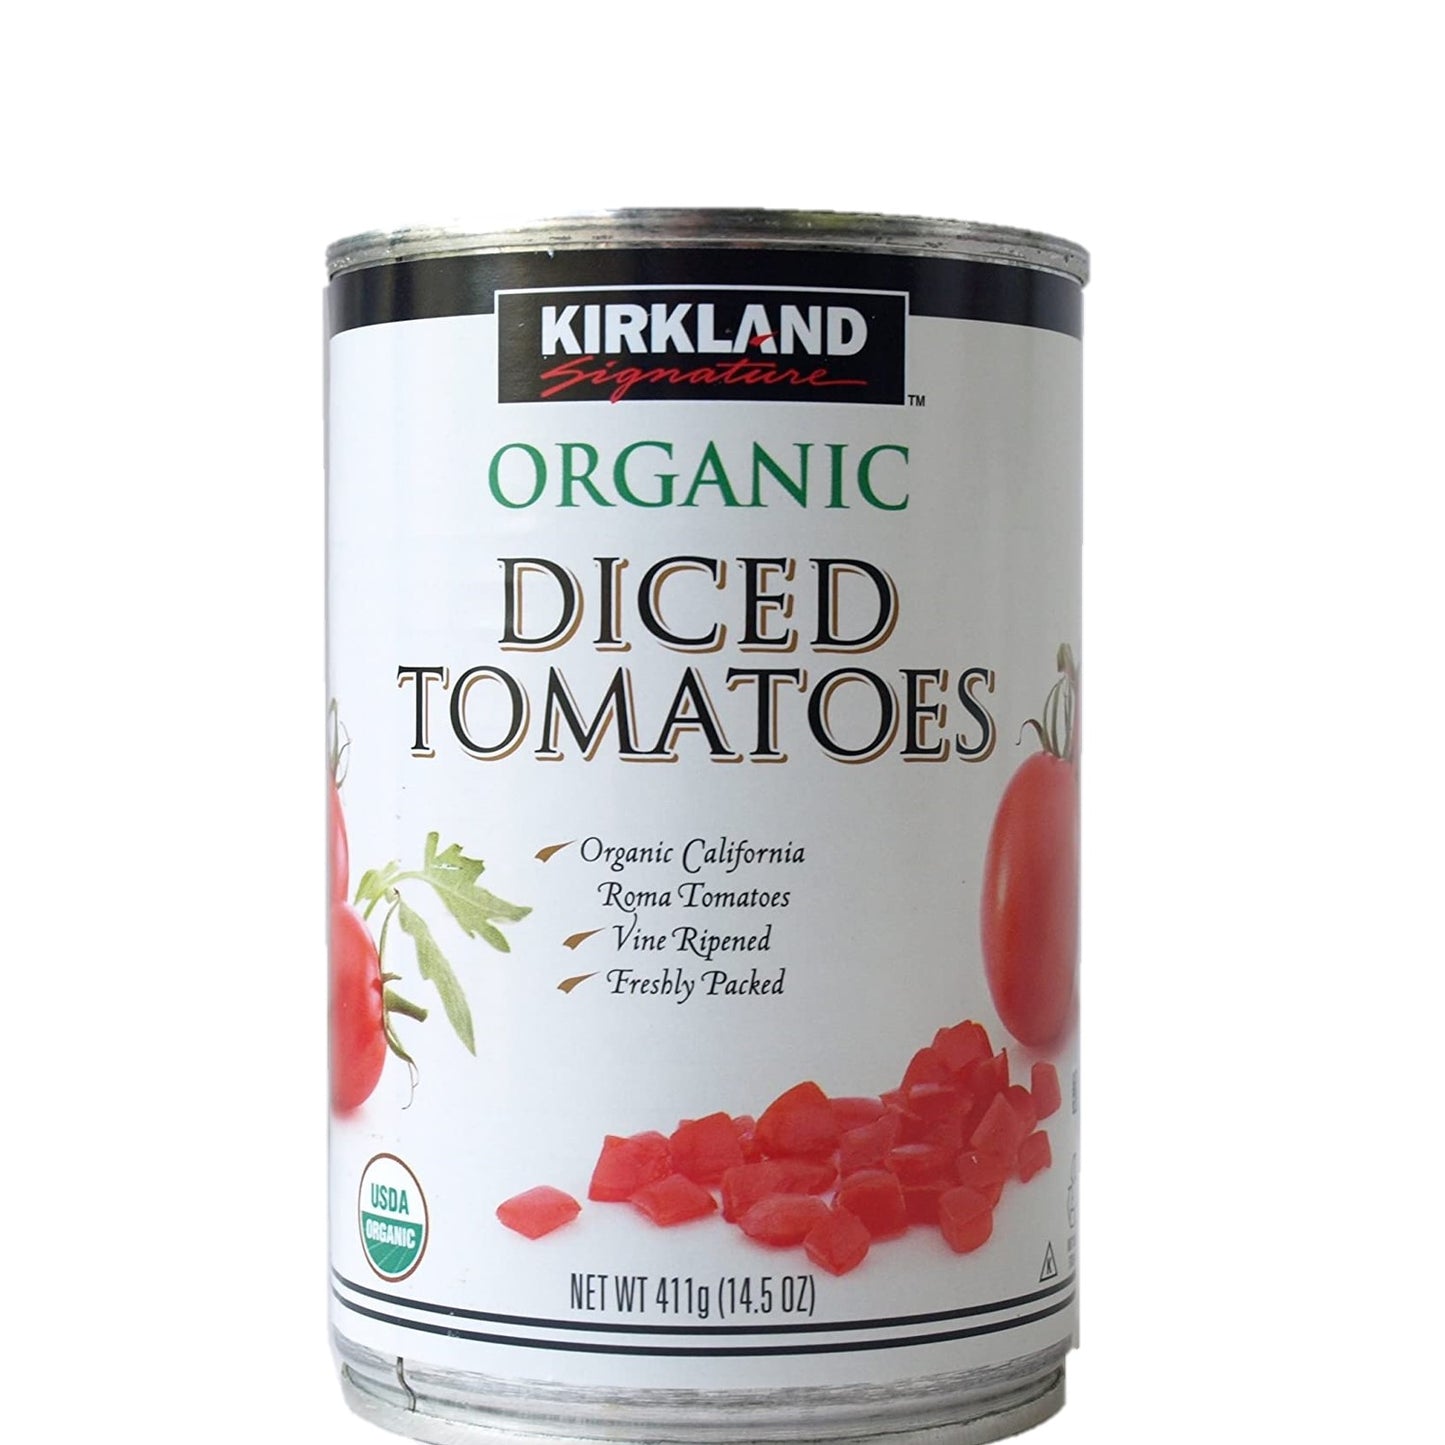 Kirkland Signature Organic California Diced Roma Tomatoes 14.5oz (411g) - 8 Cans